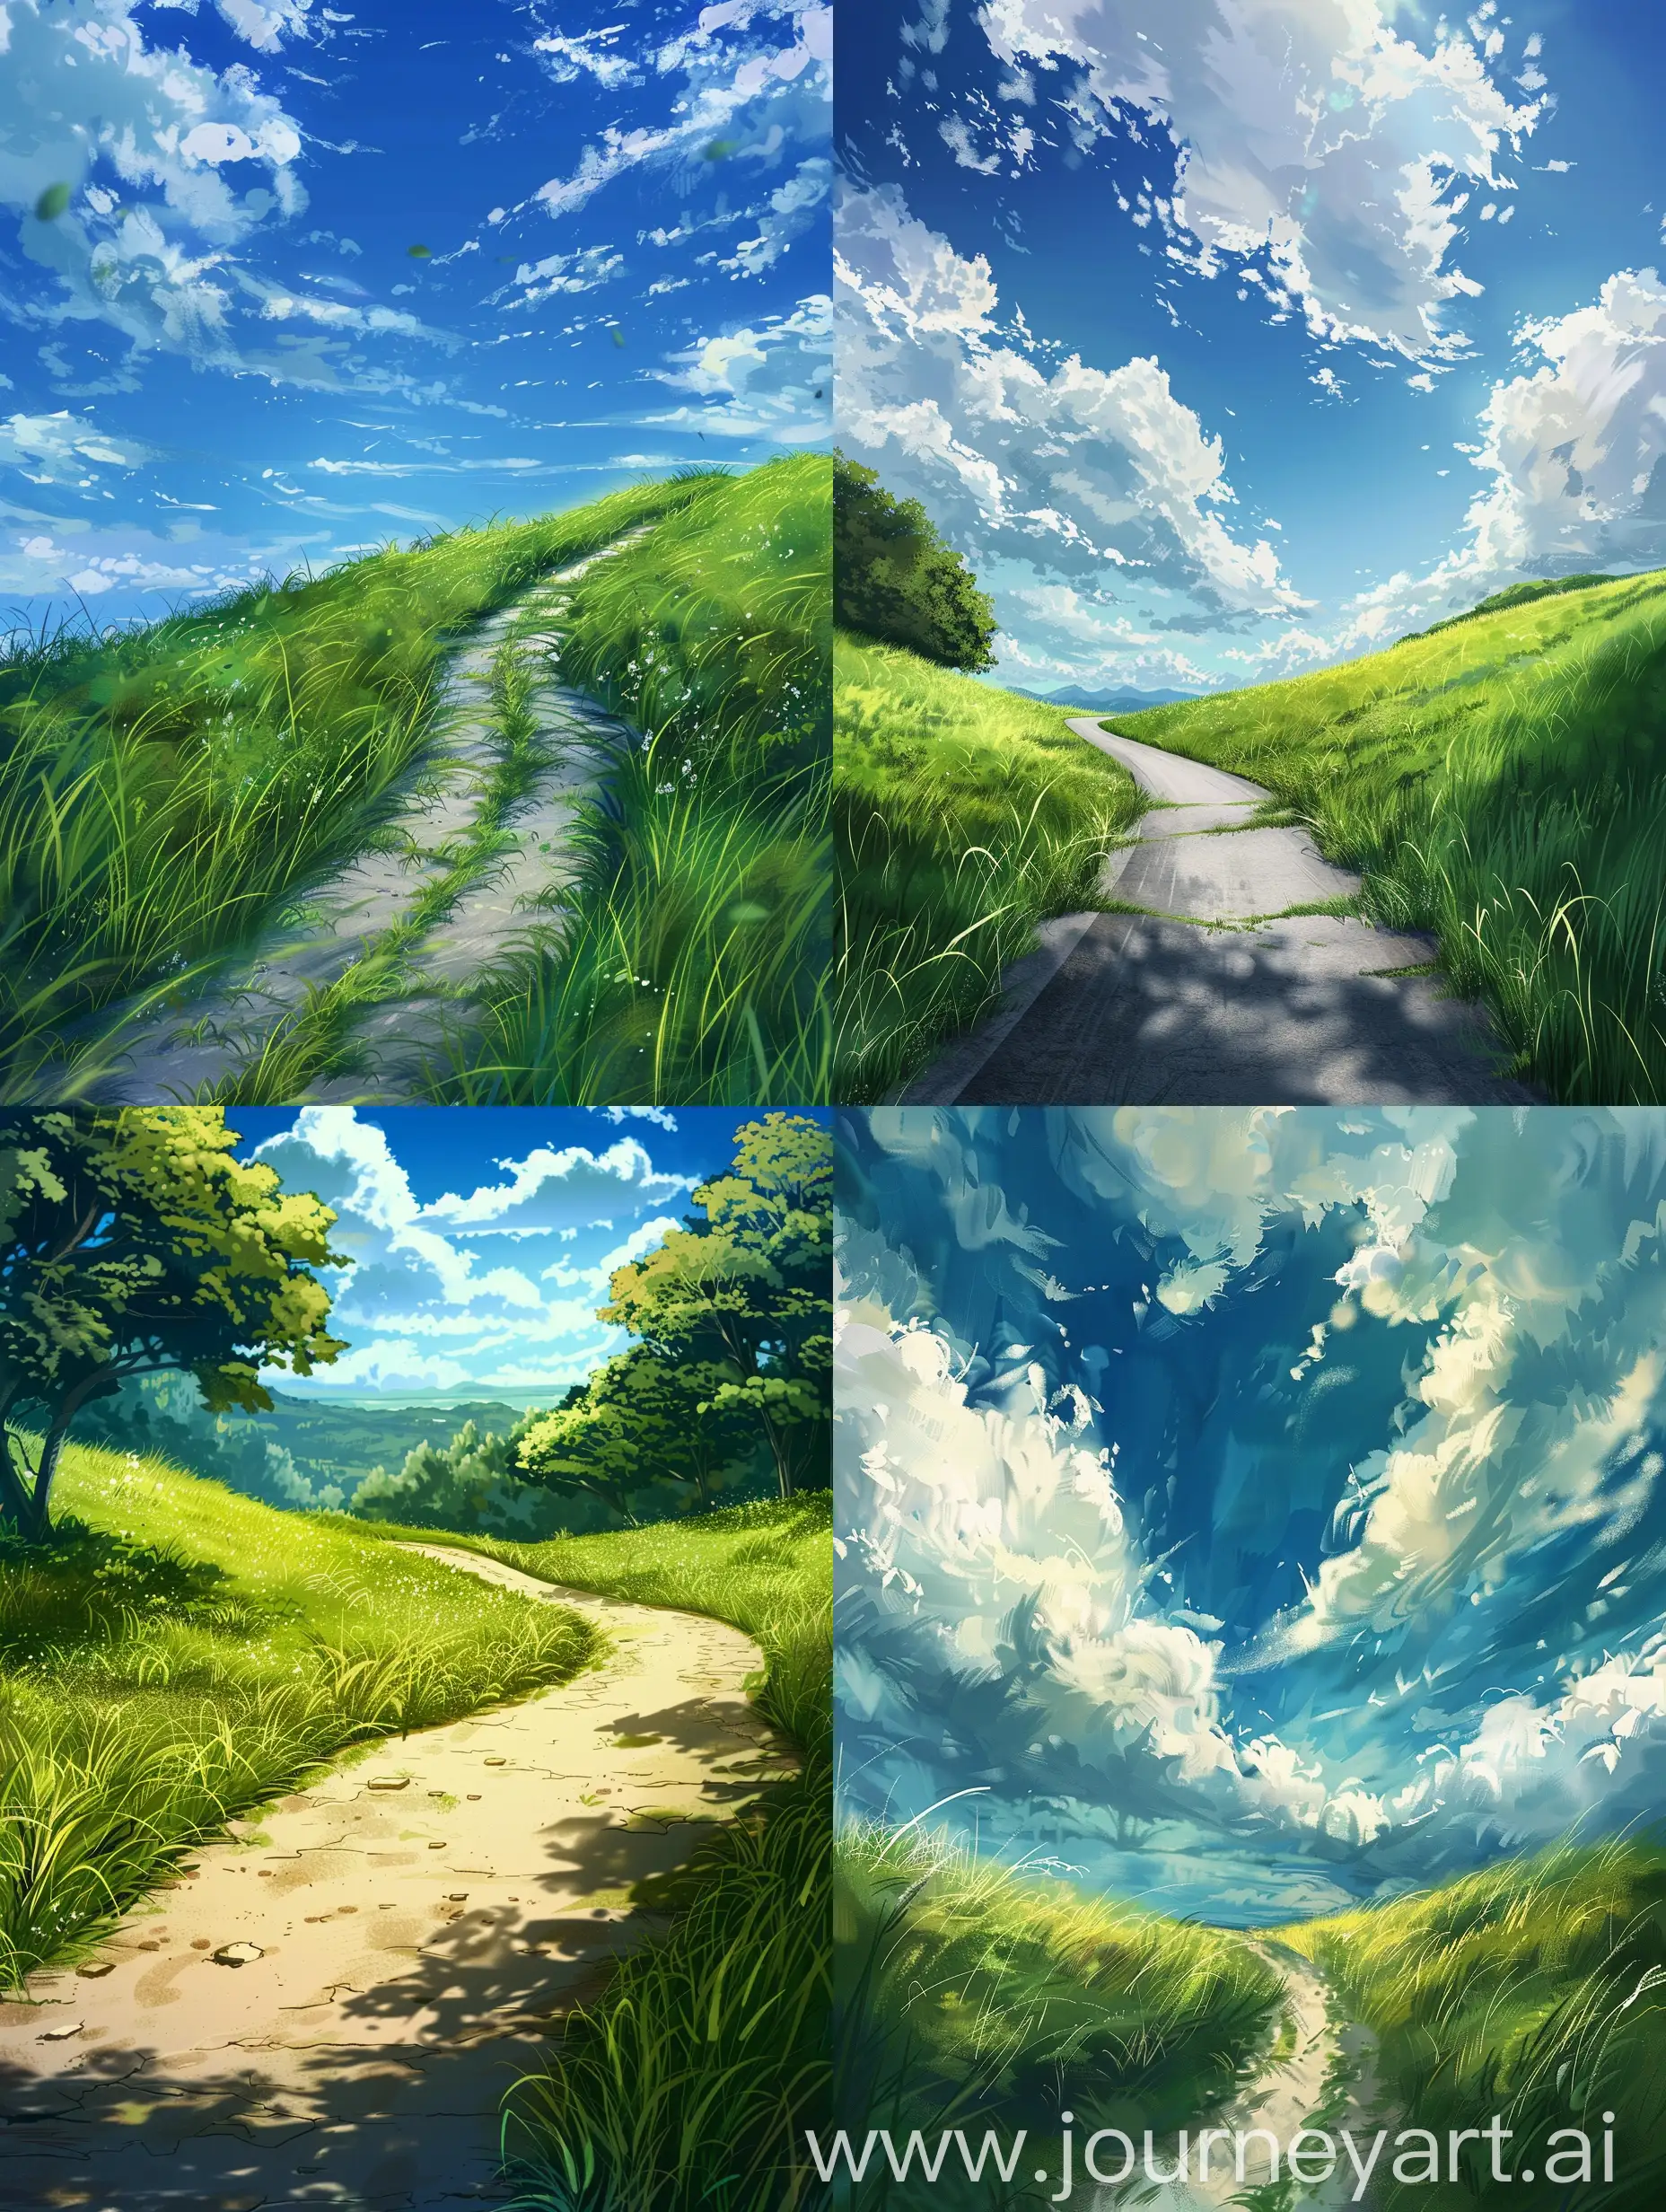 Enchanting-Fantasy-Anime-Landscape-with-Grasslined-Road